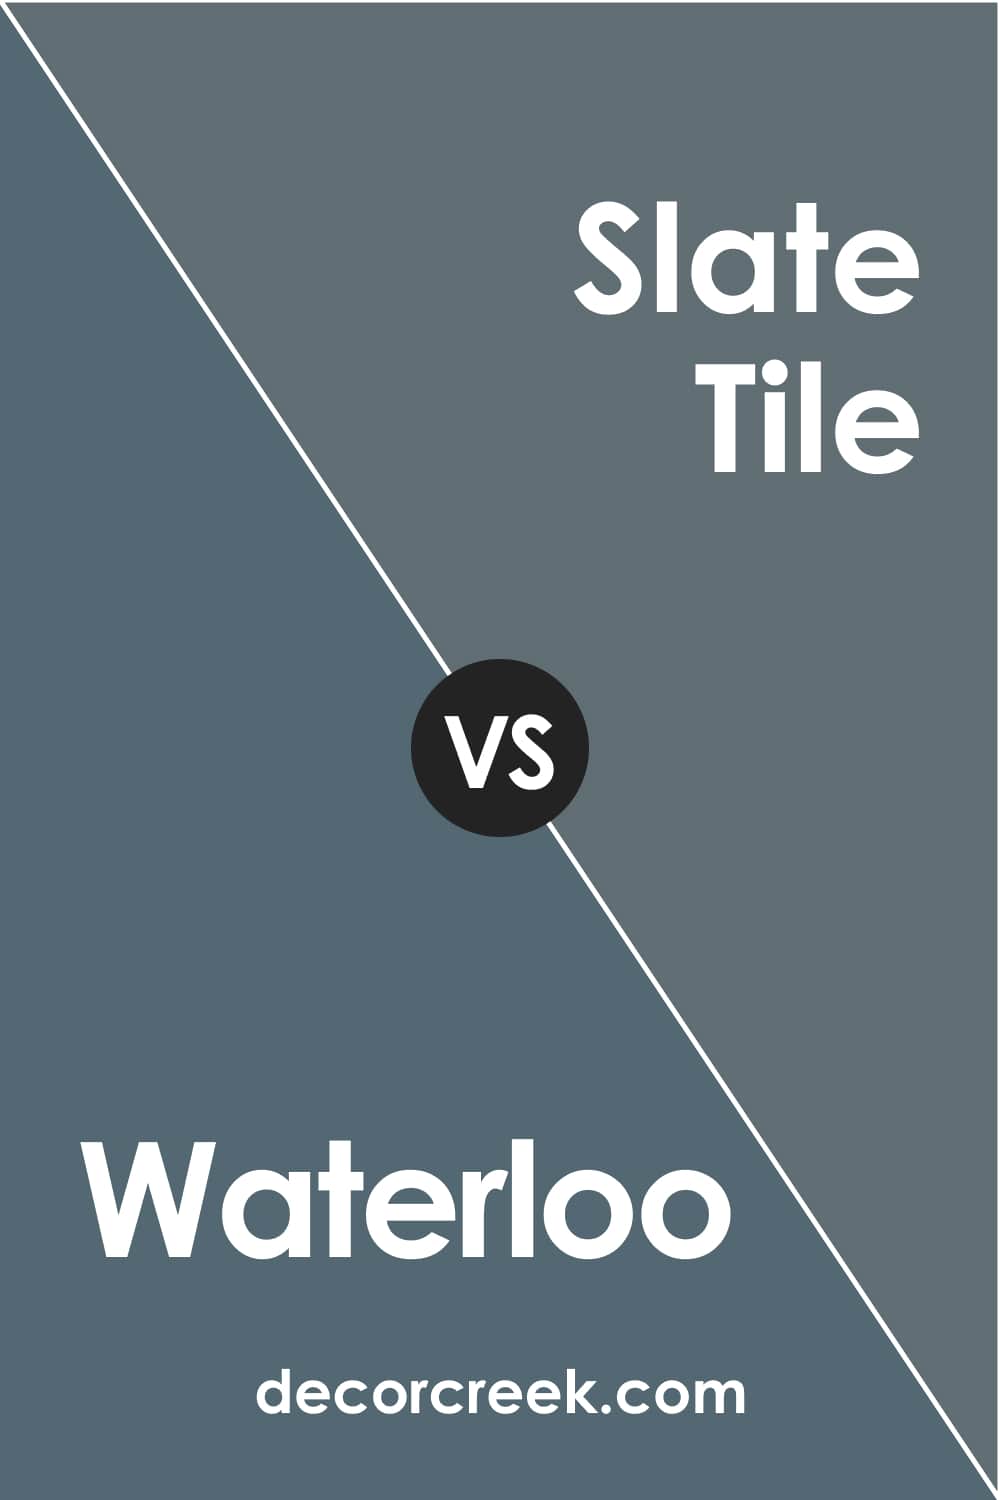 Waterloo vs Slate Tile